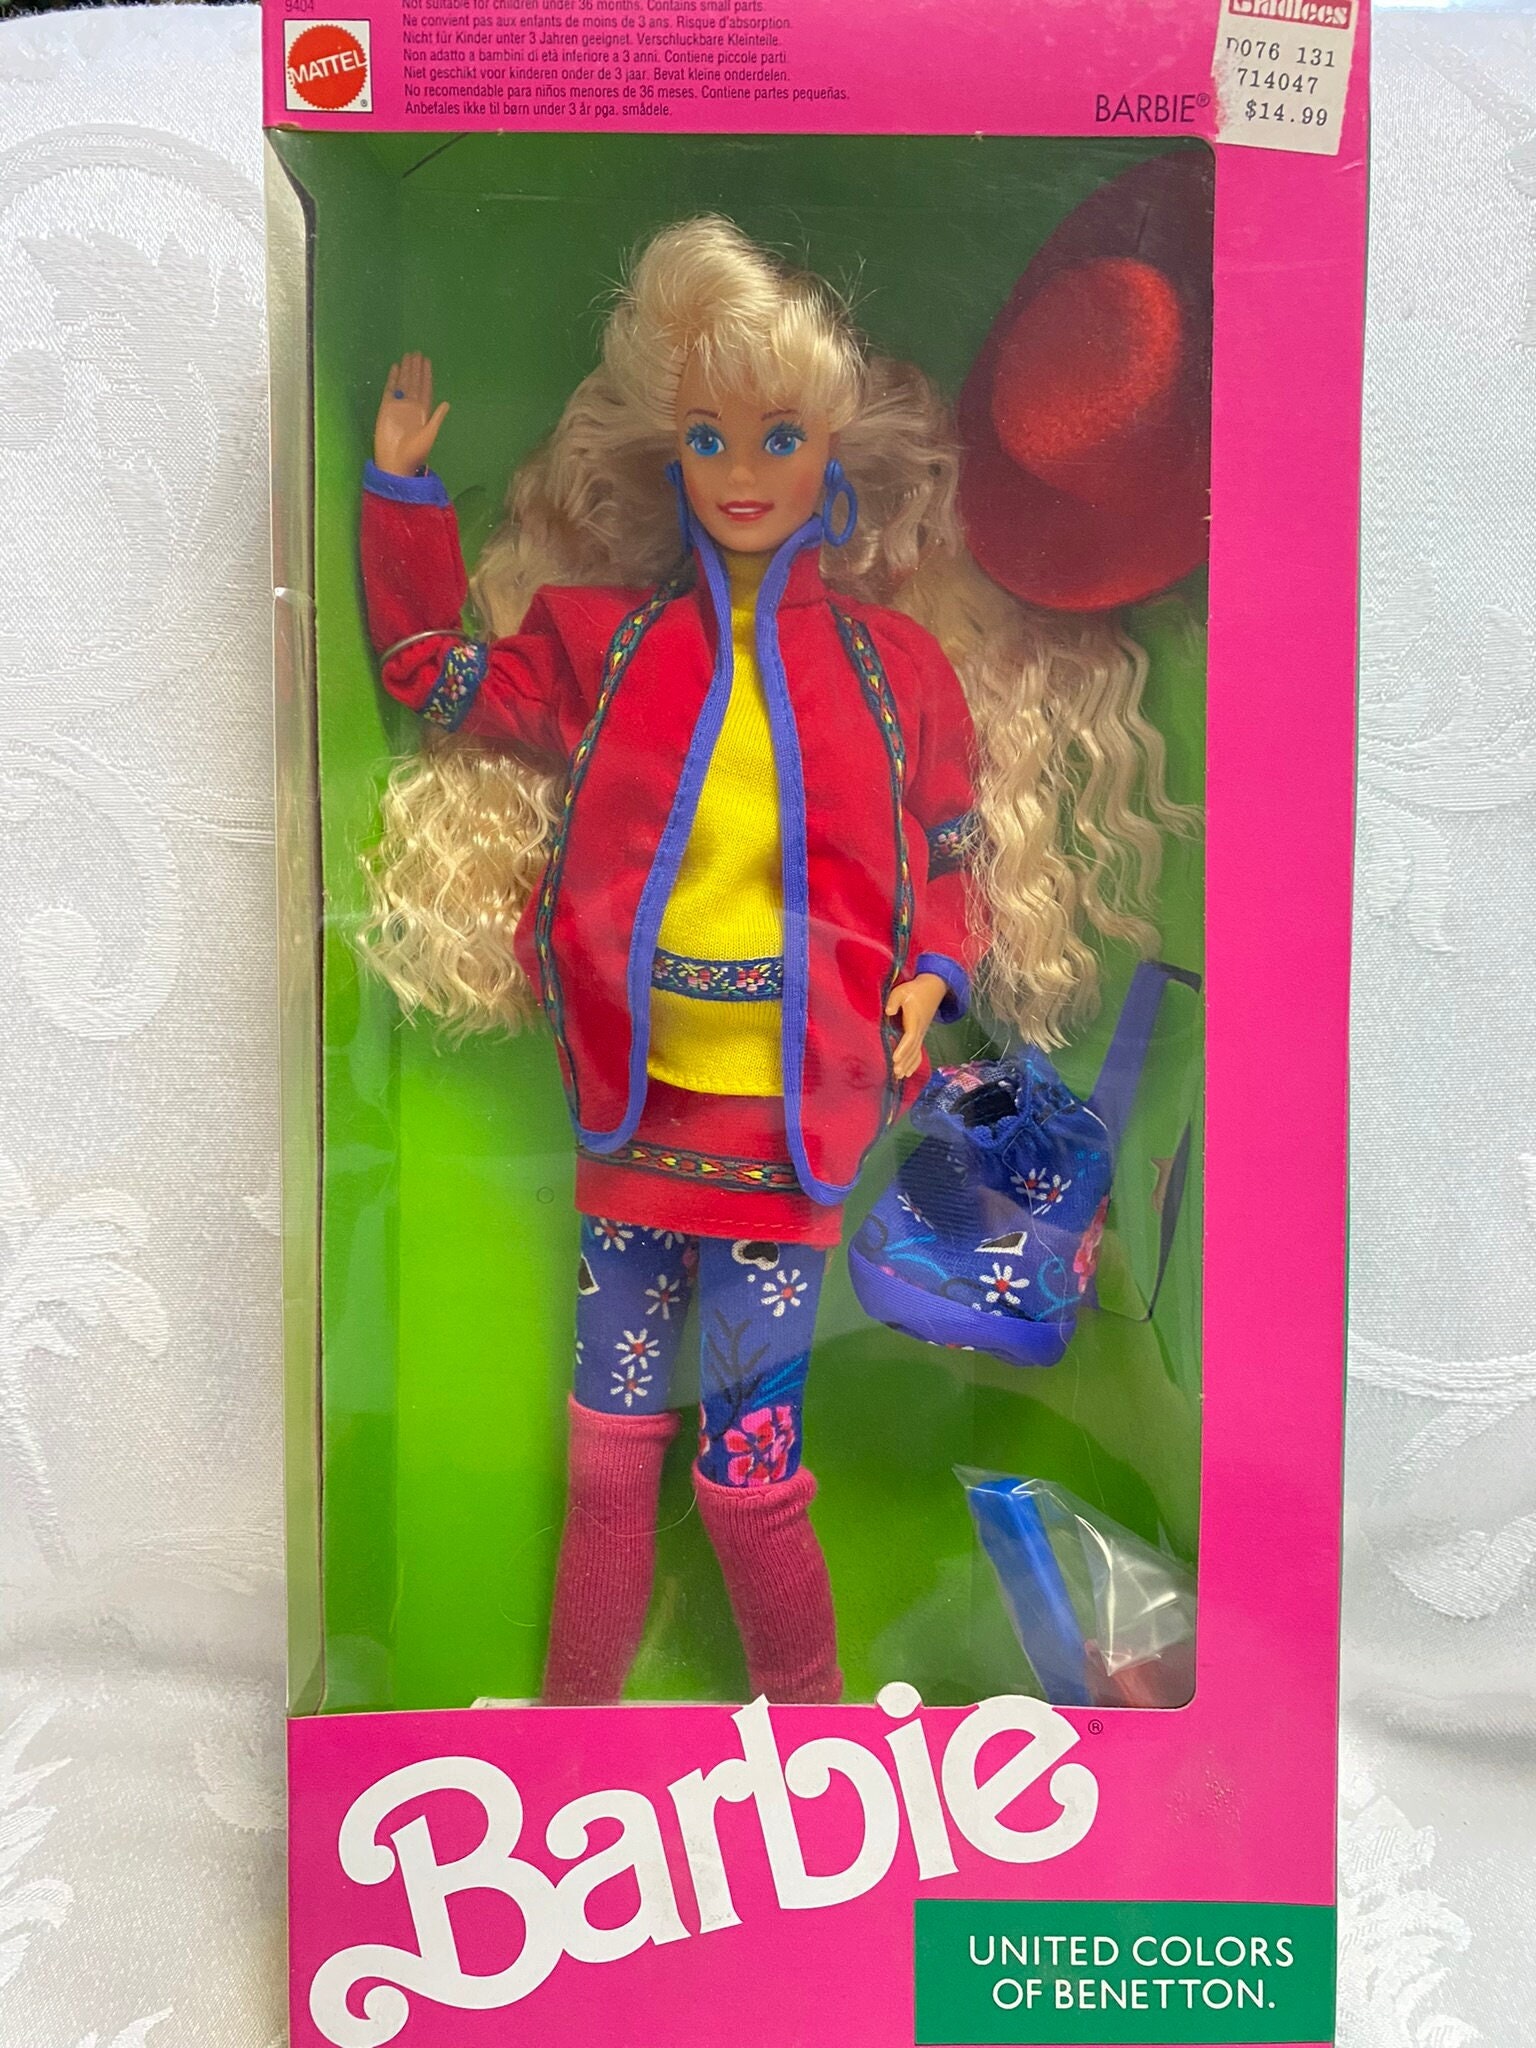 Shilling Fluisteren Doodt Vintage United Colors of Benetton Barbie - Etsy